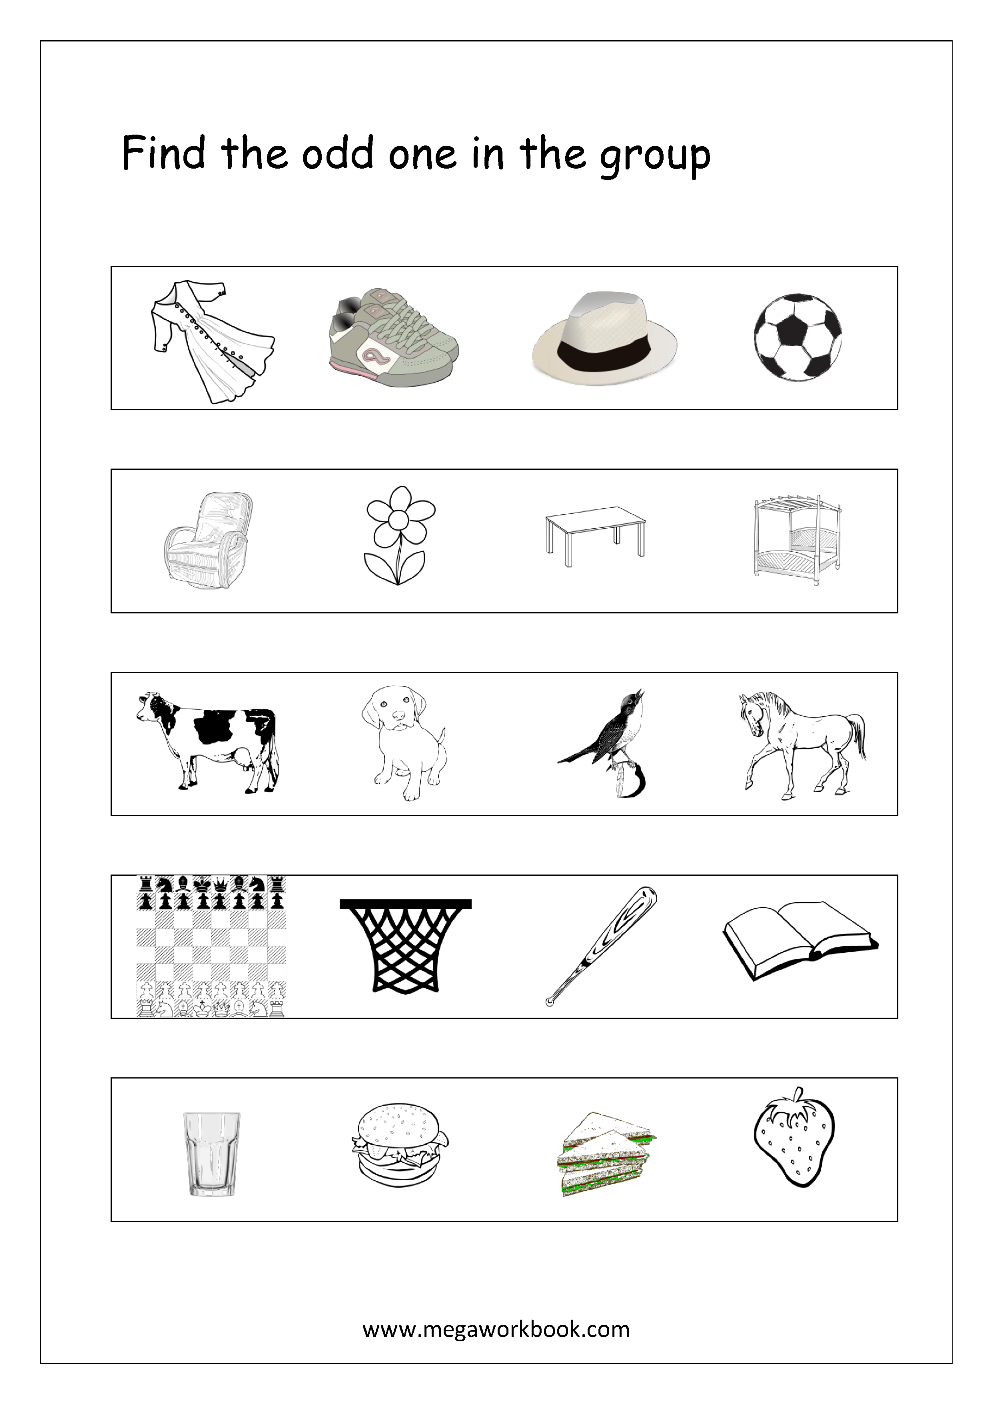 Free General Aptitude Worksheets - Odd One Out - Megaworkbook | Free Printable Worksheets For Kids Science